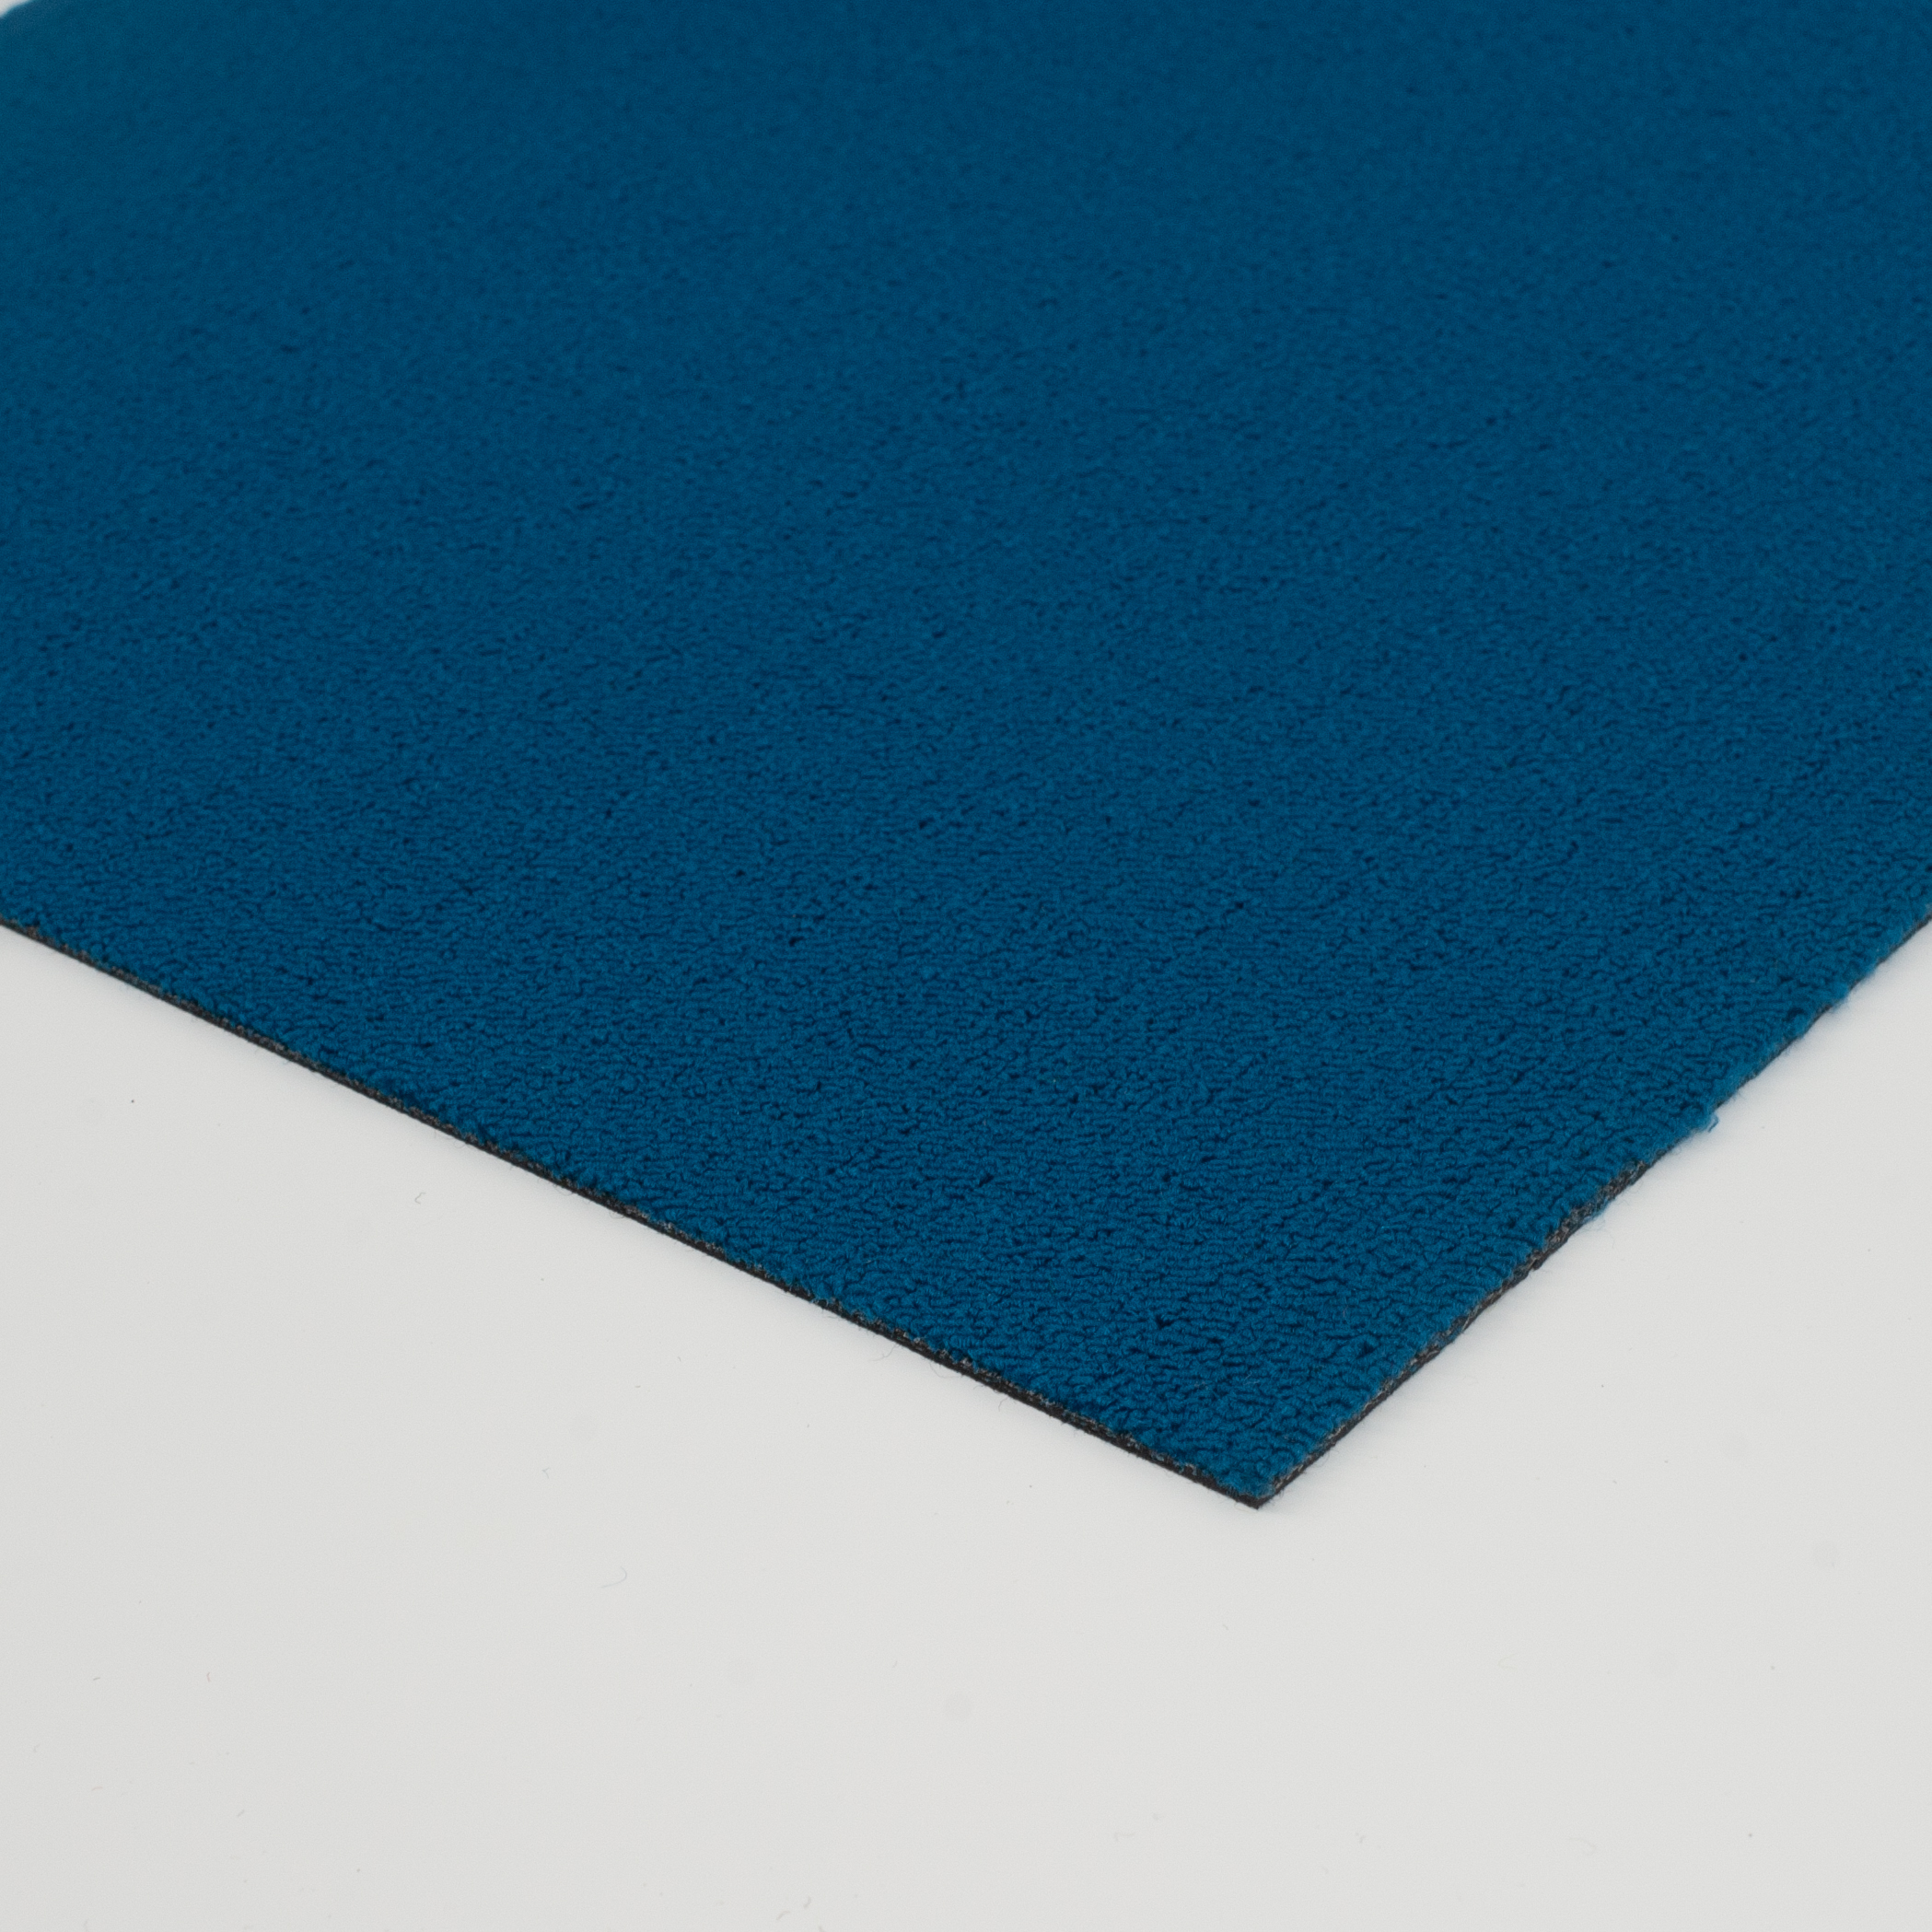 Azulejos de alfombra rectangulares de calidad impermeable